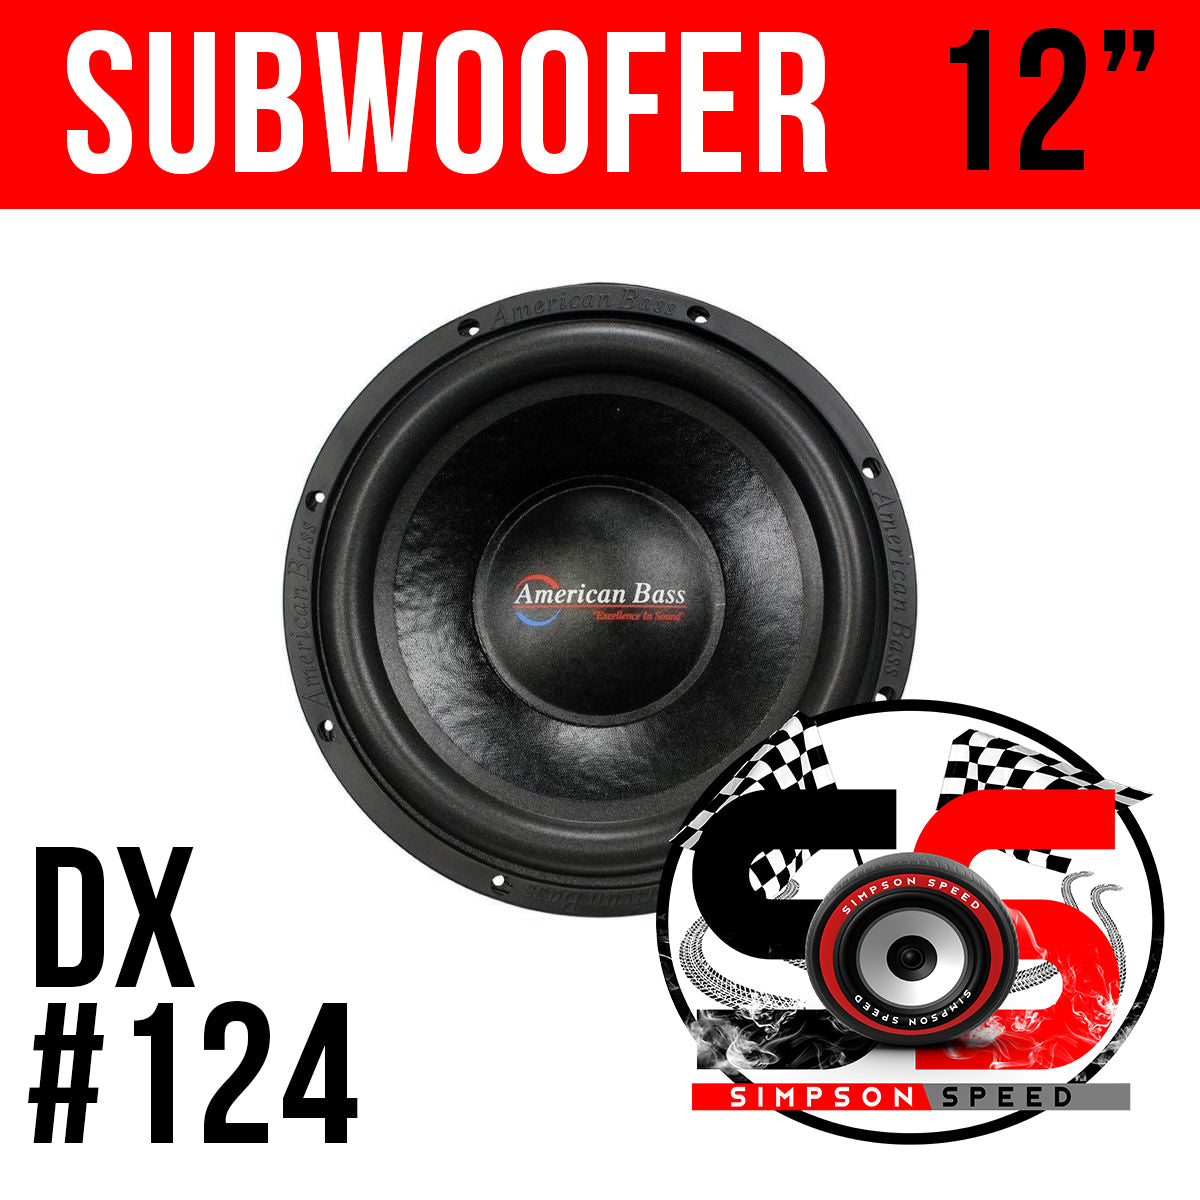 DX 12 American Bass Subwoofer